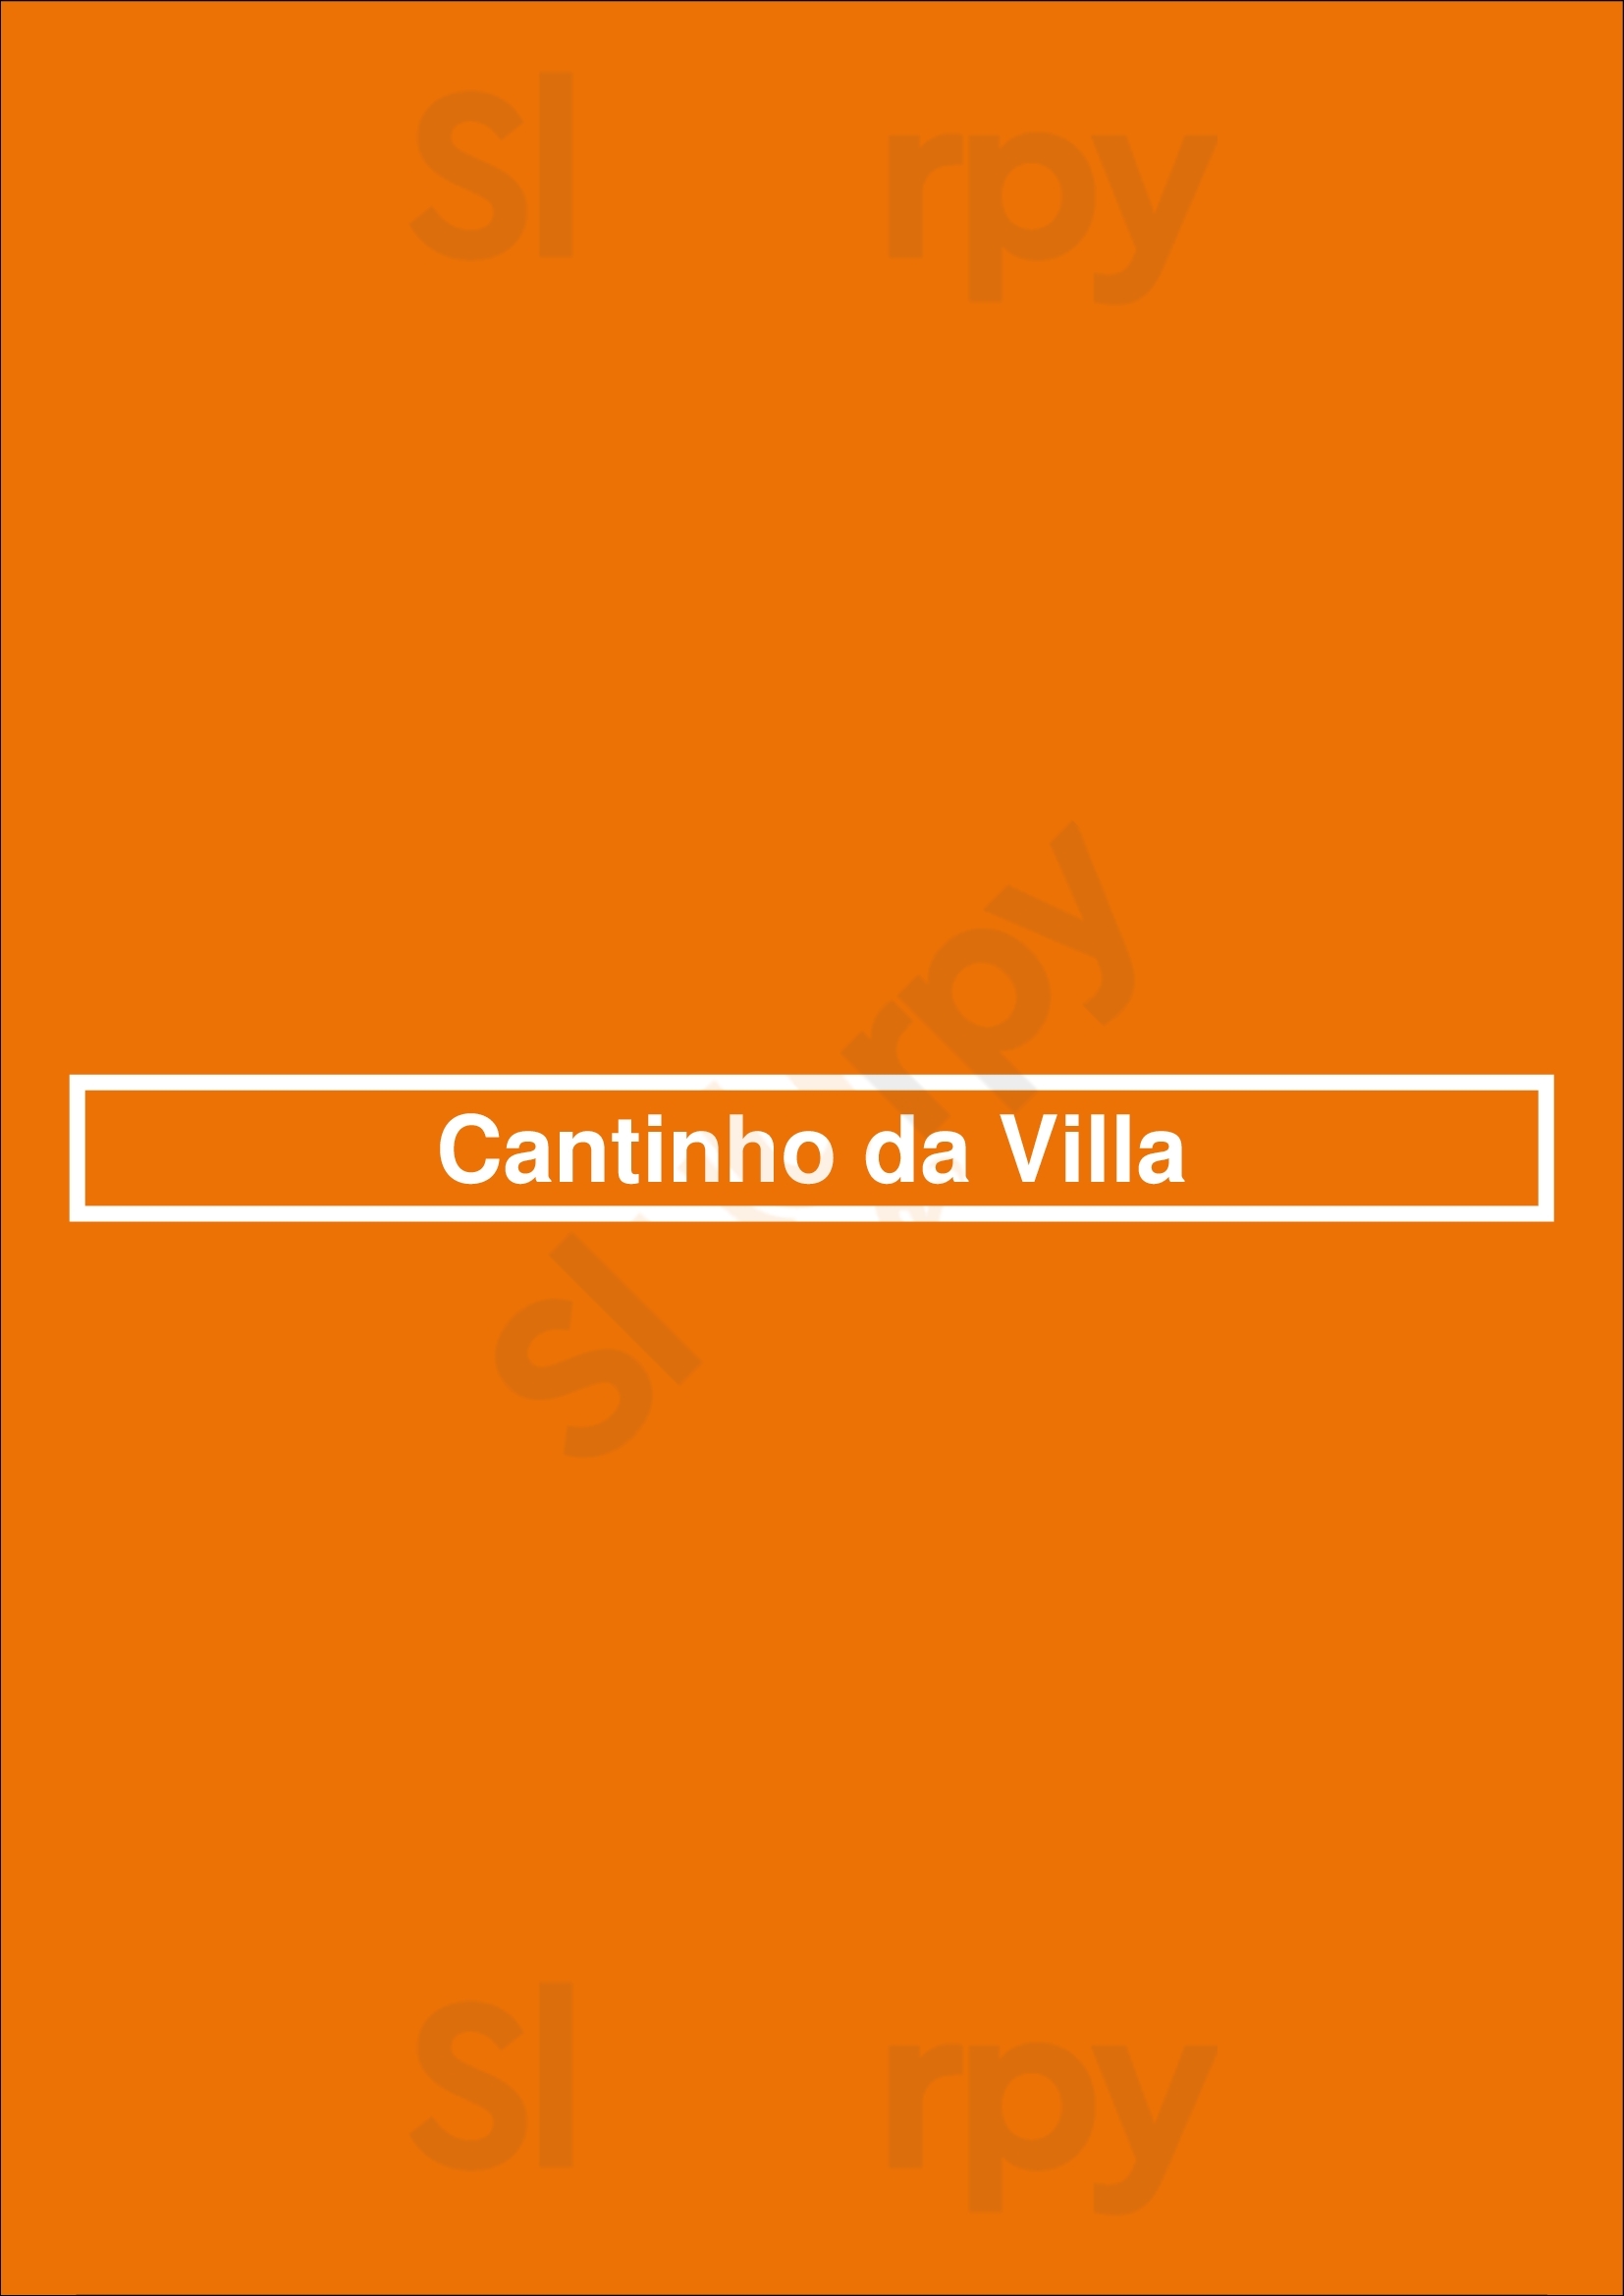 Cantinho Da Villa Santa Maria da Feira Menu - 1